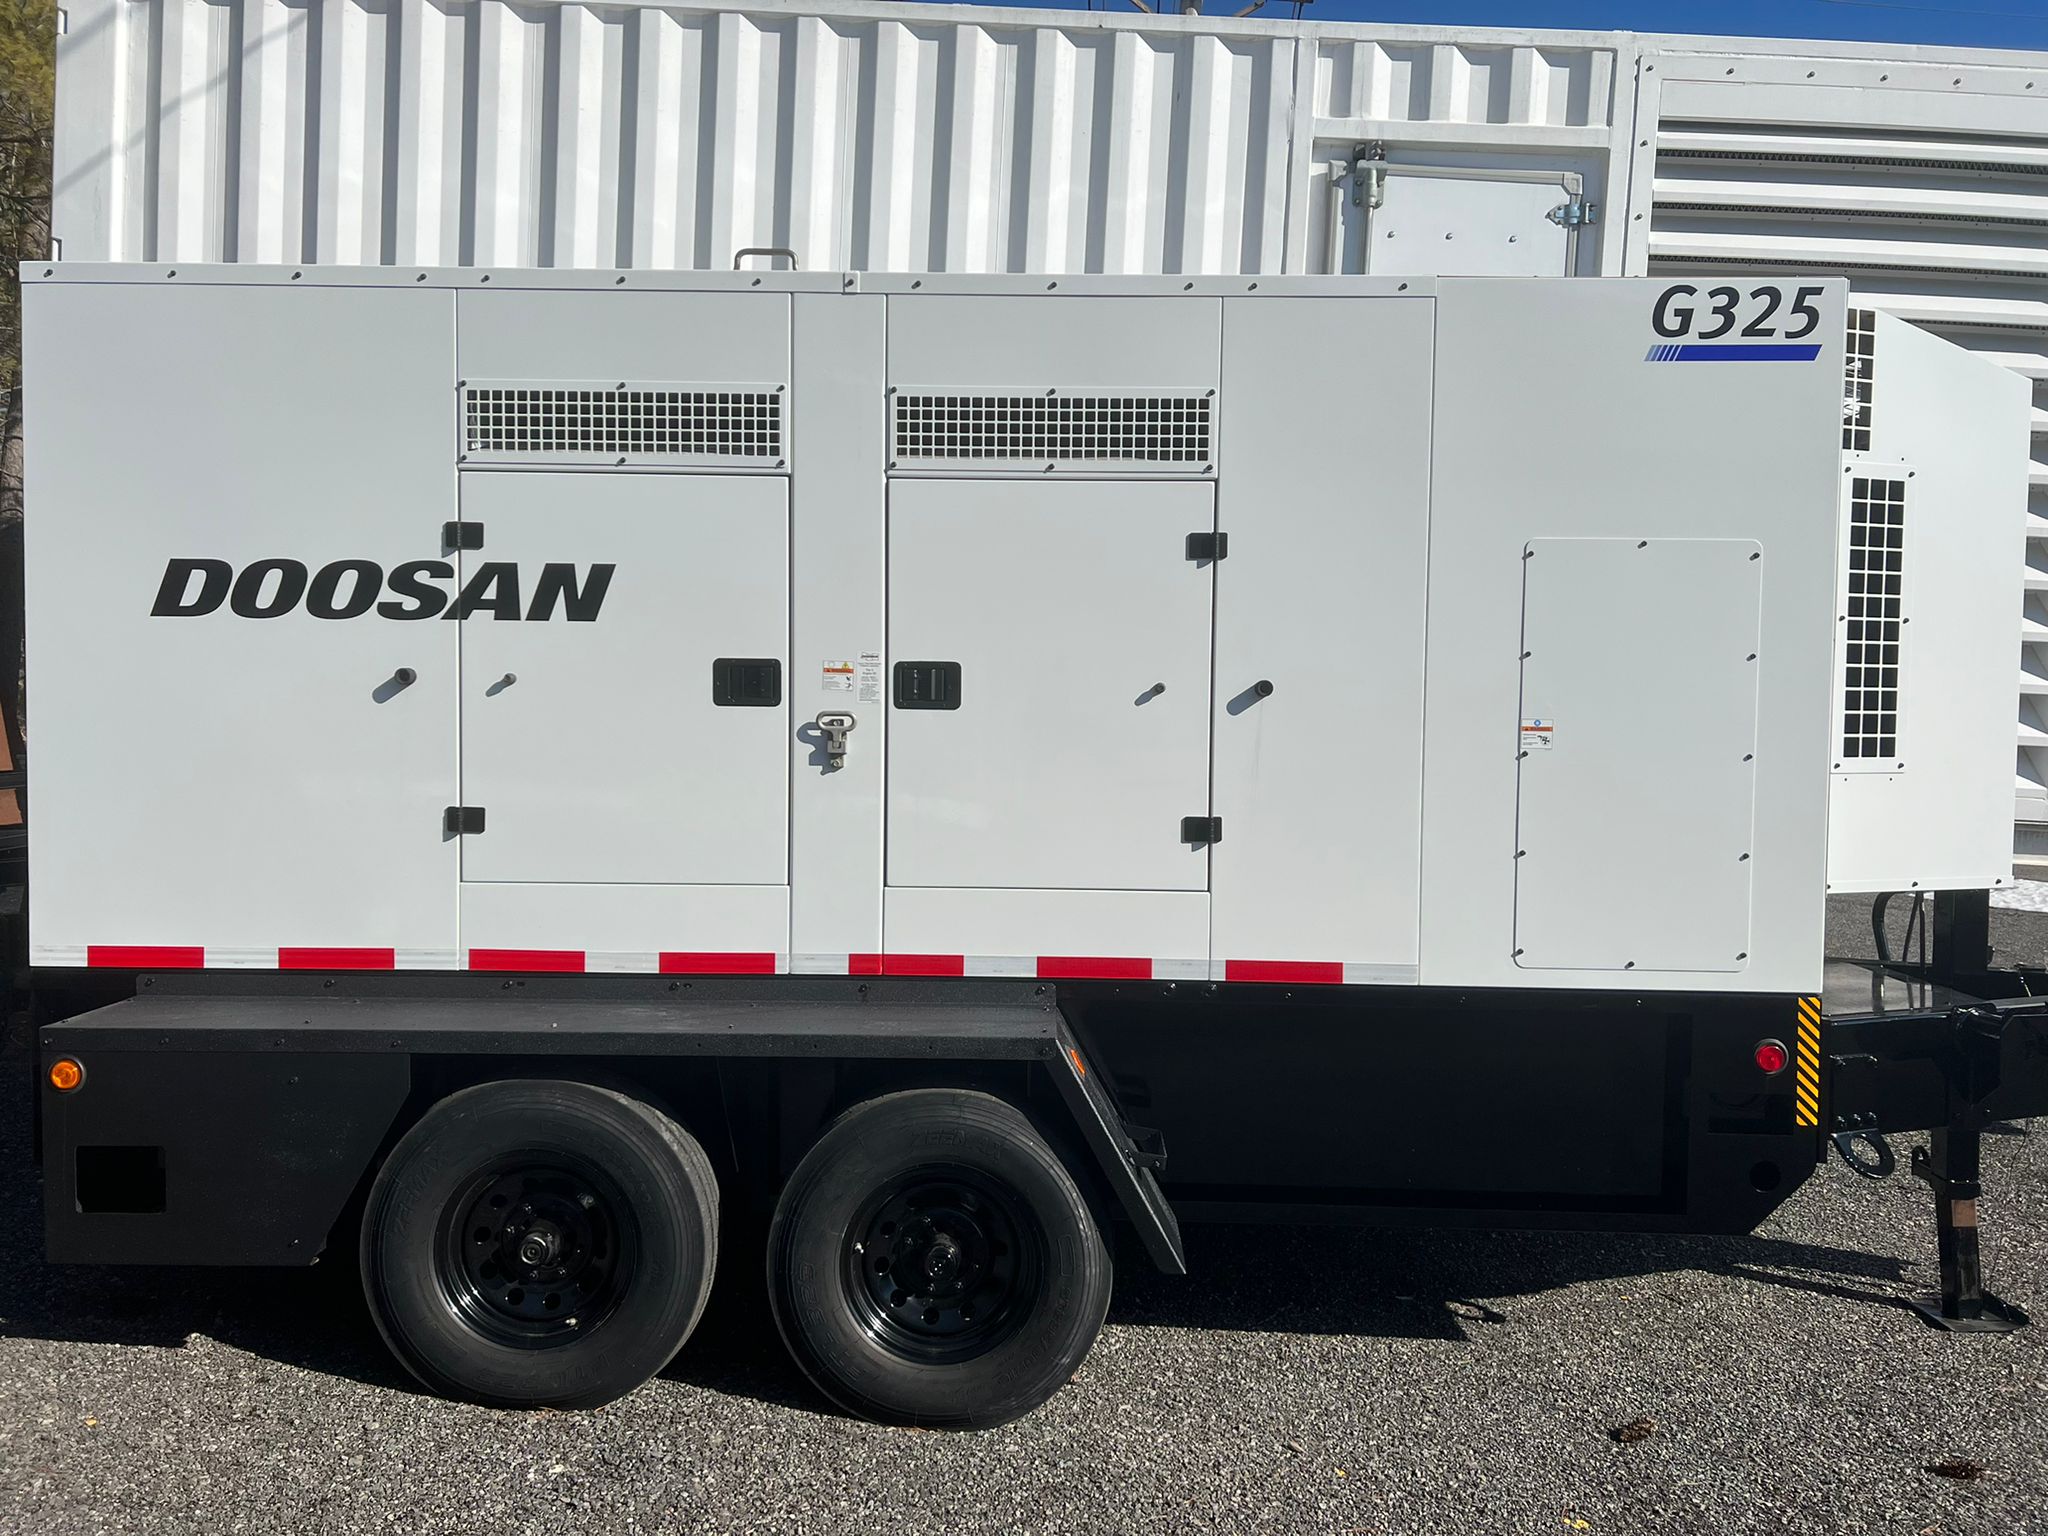 Used 260 kW Doosan G325 Portable Diesel Generator – EPA Tier 4I – Just In!